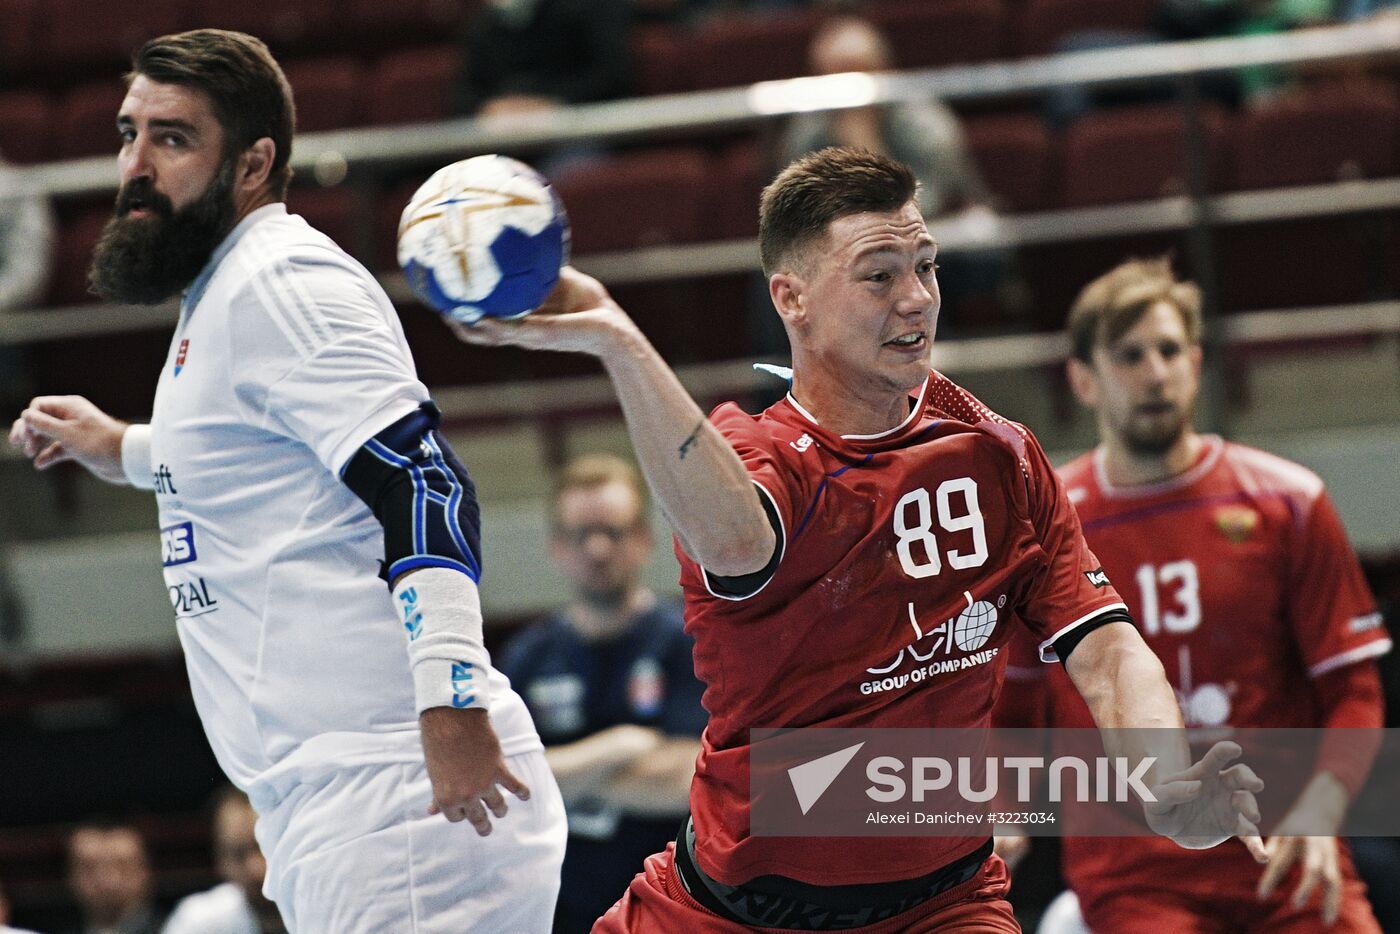 Handball. 2019 Men's World Championship Qualification match. Russia vs Slovakia